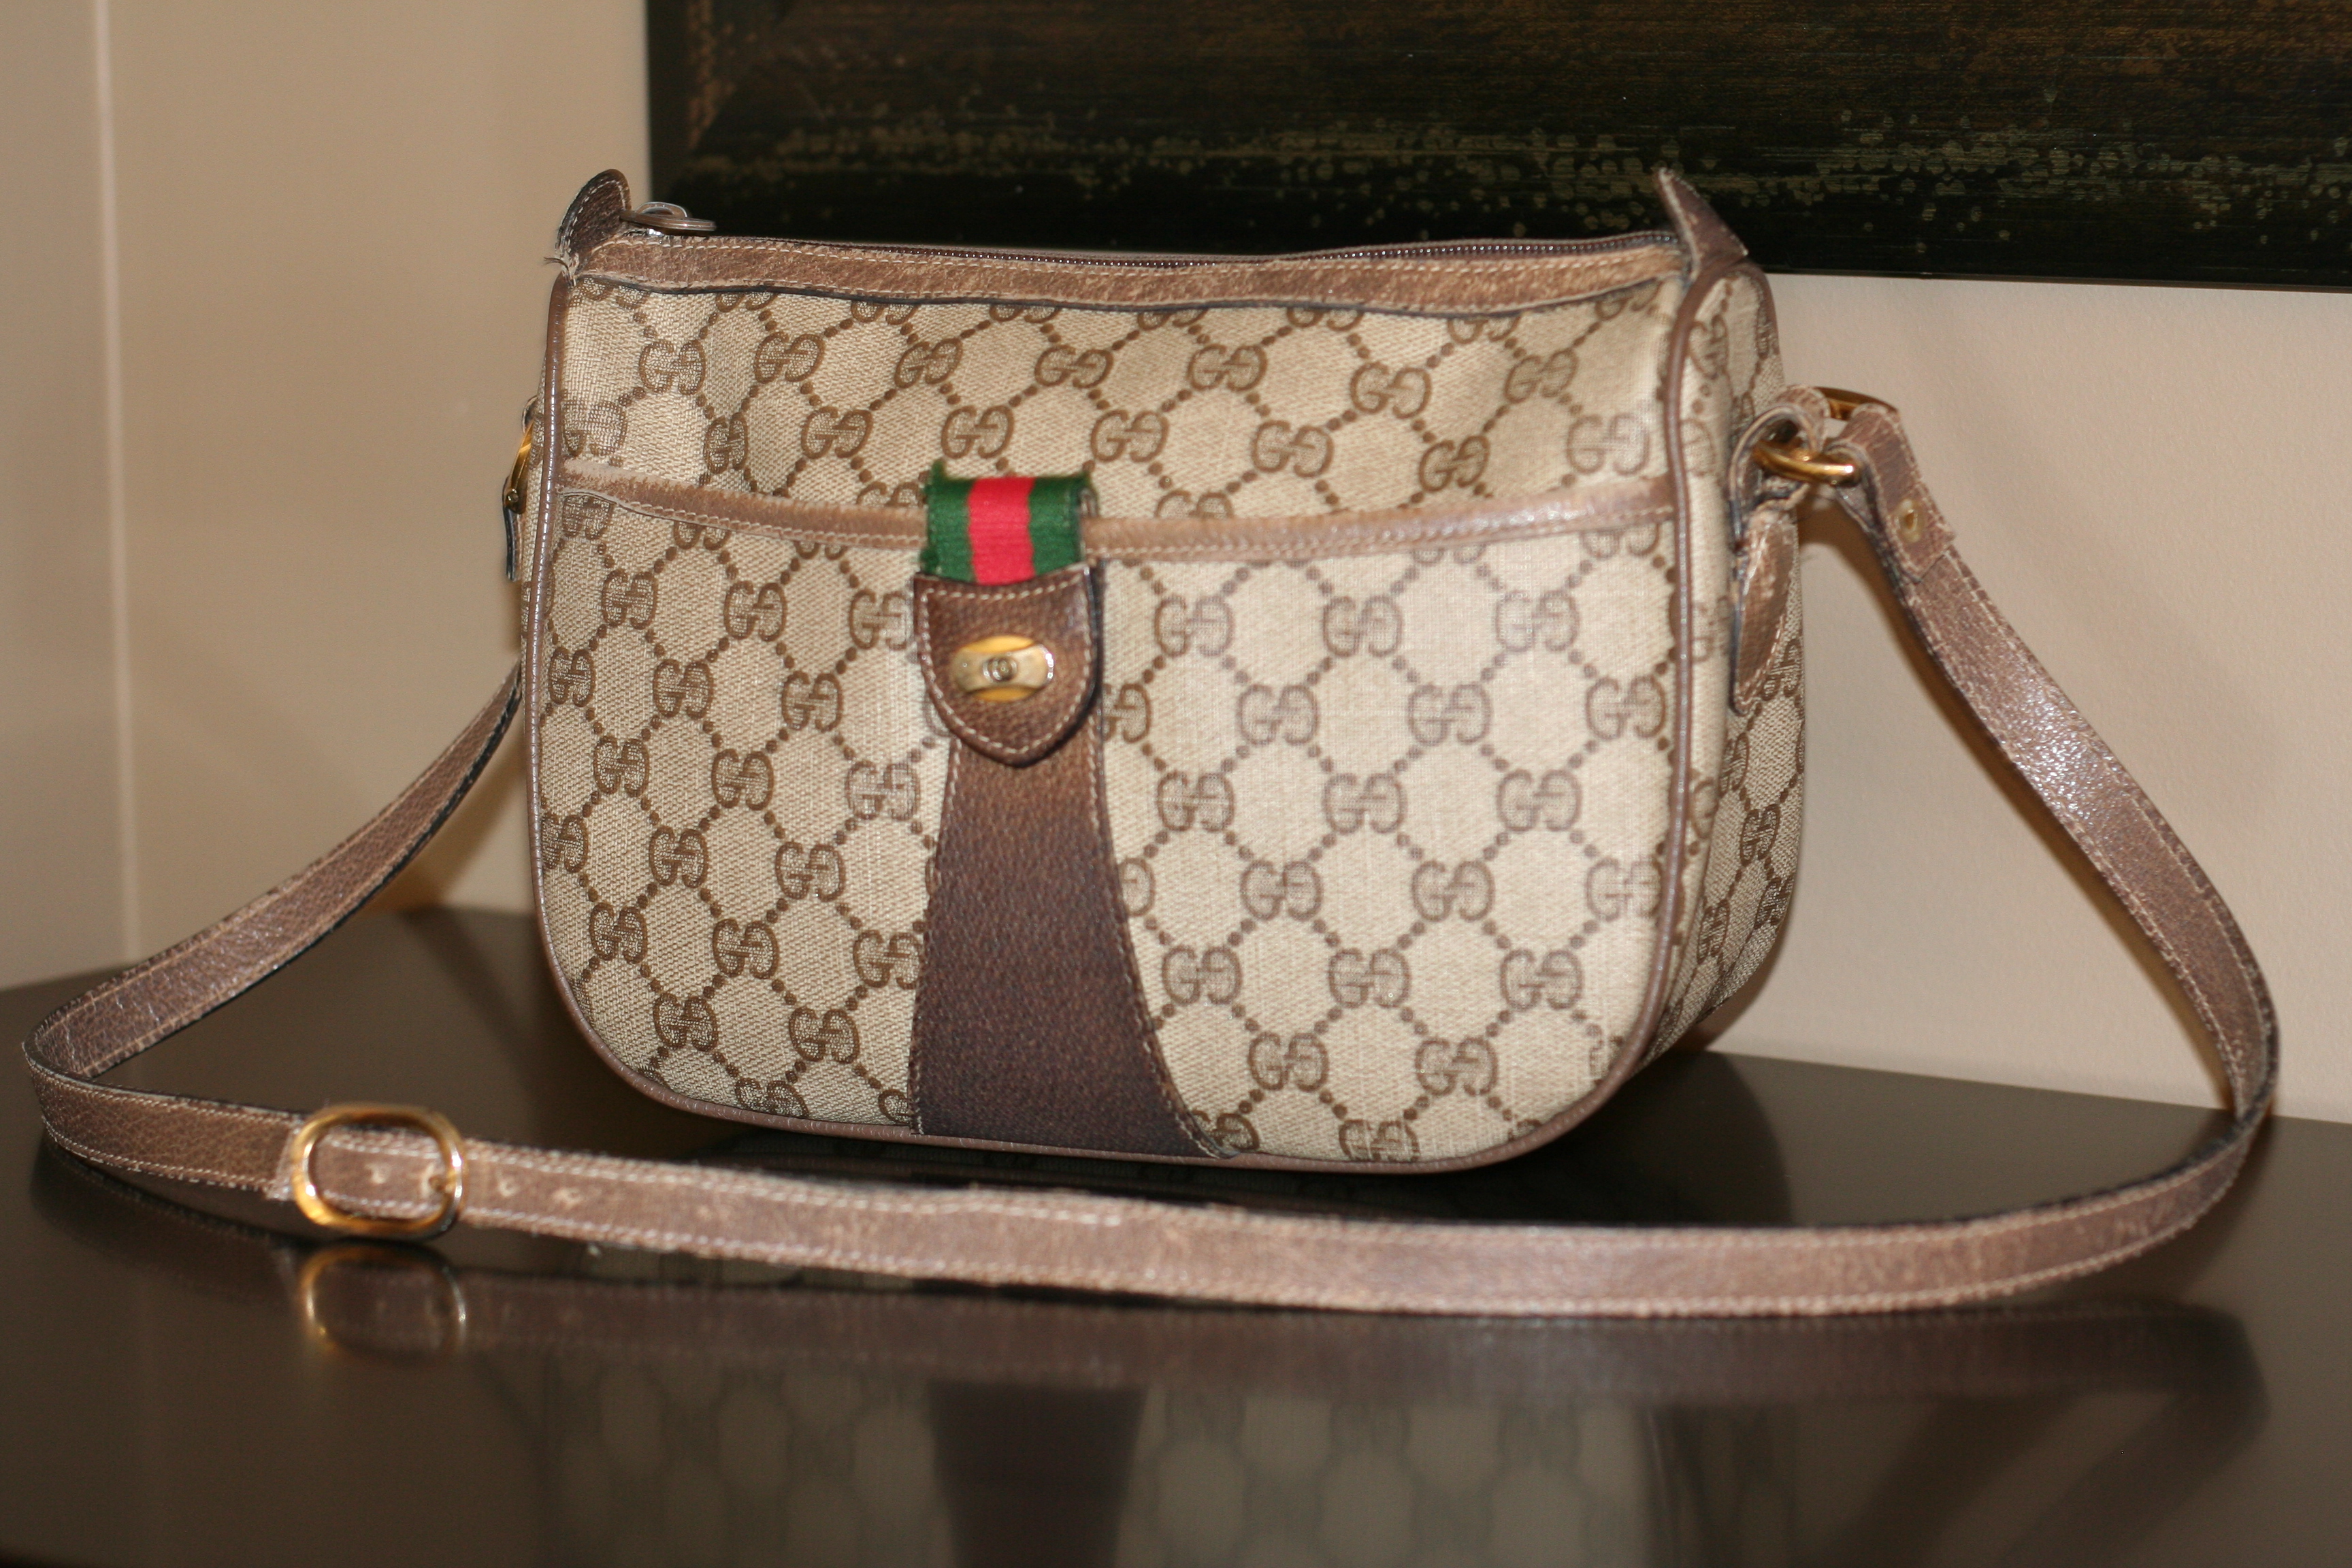 vintage gucci handbag at thrift store | Find?